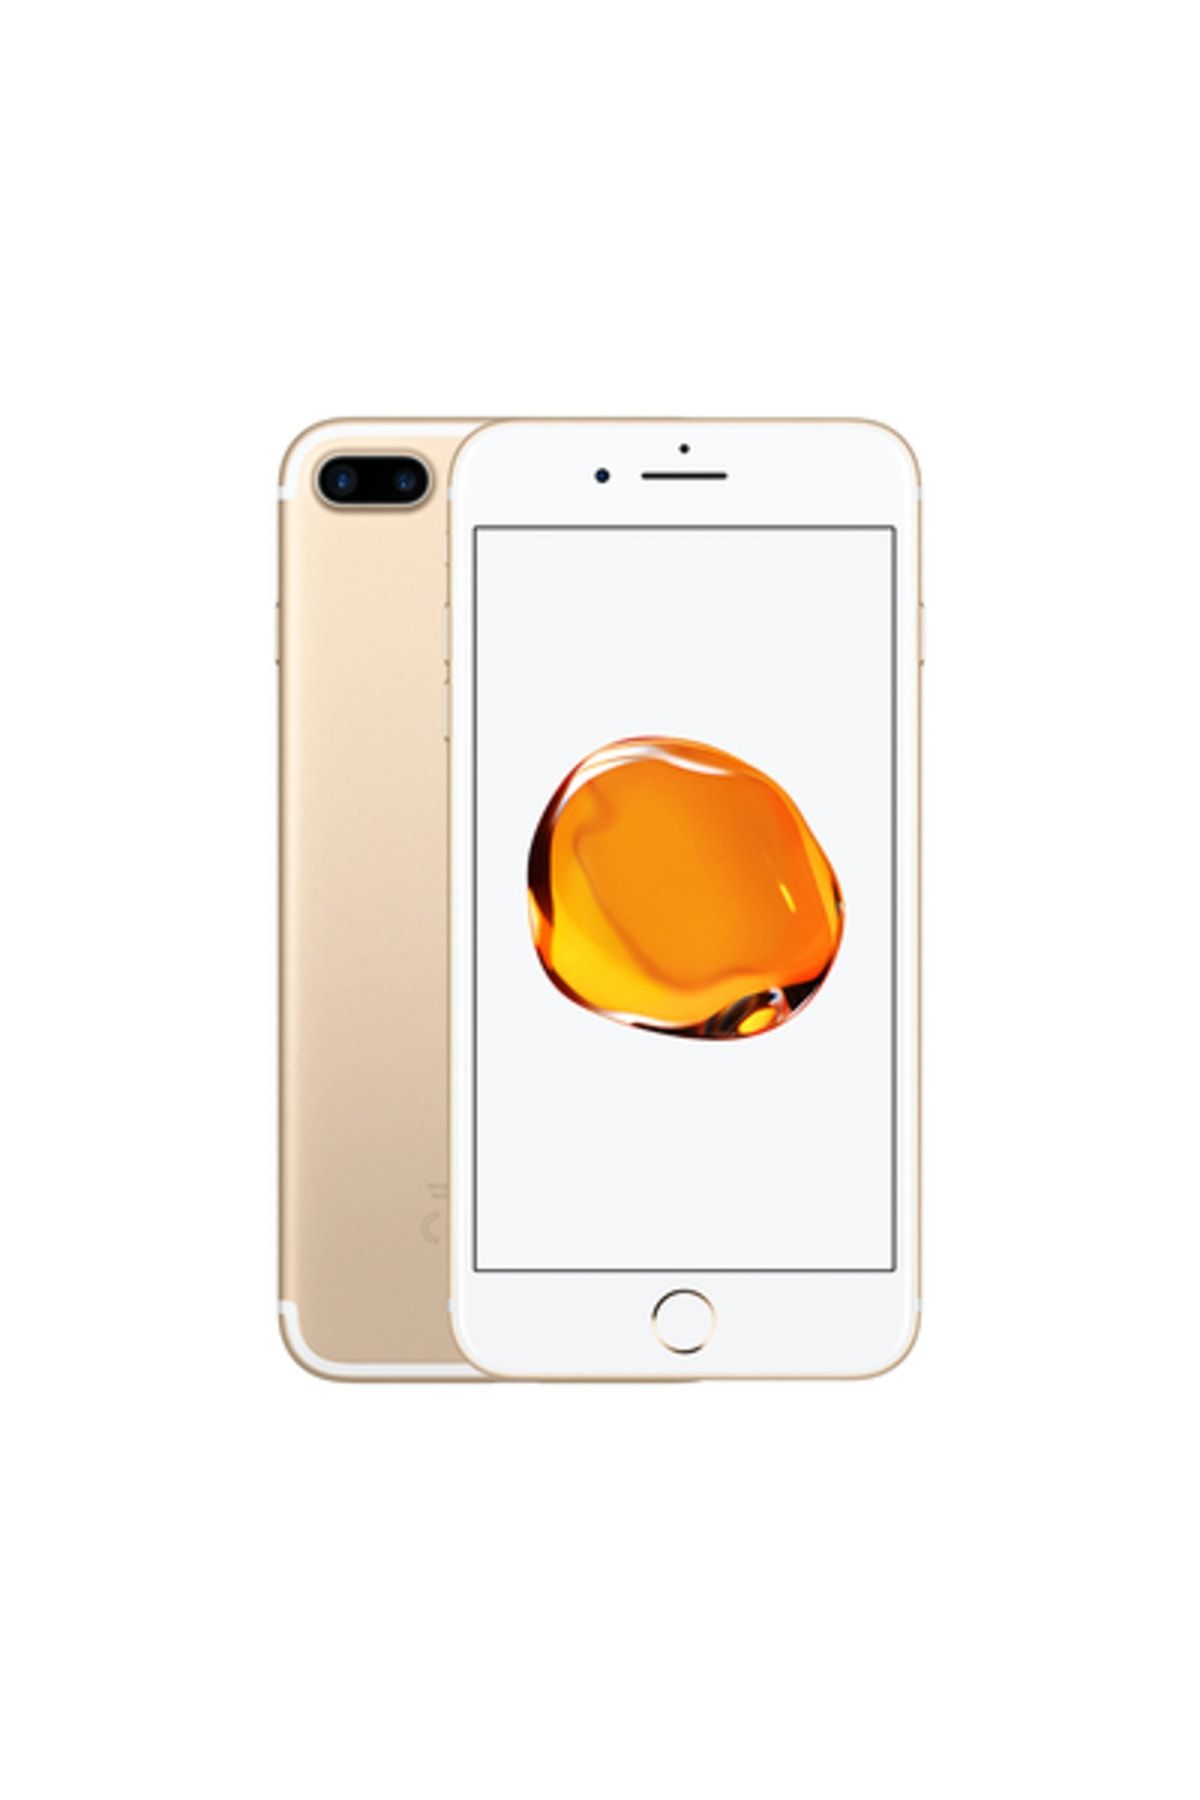 Apple Yenilenmiş Iphone 7 Plus 256 Gb Altın 256 Gb Altın B Grade